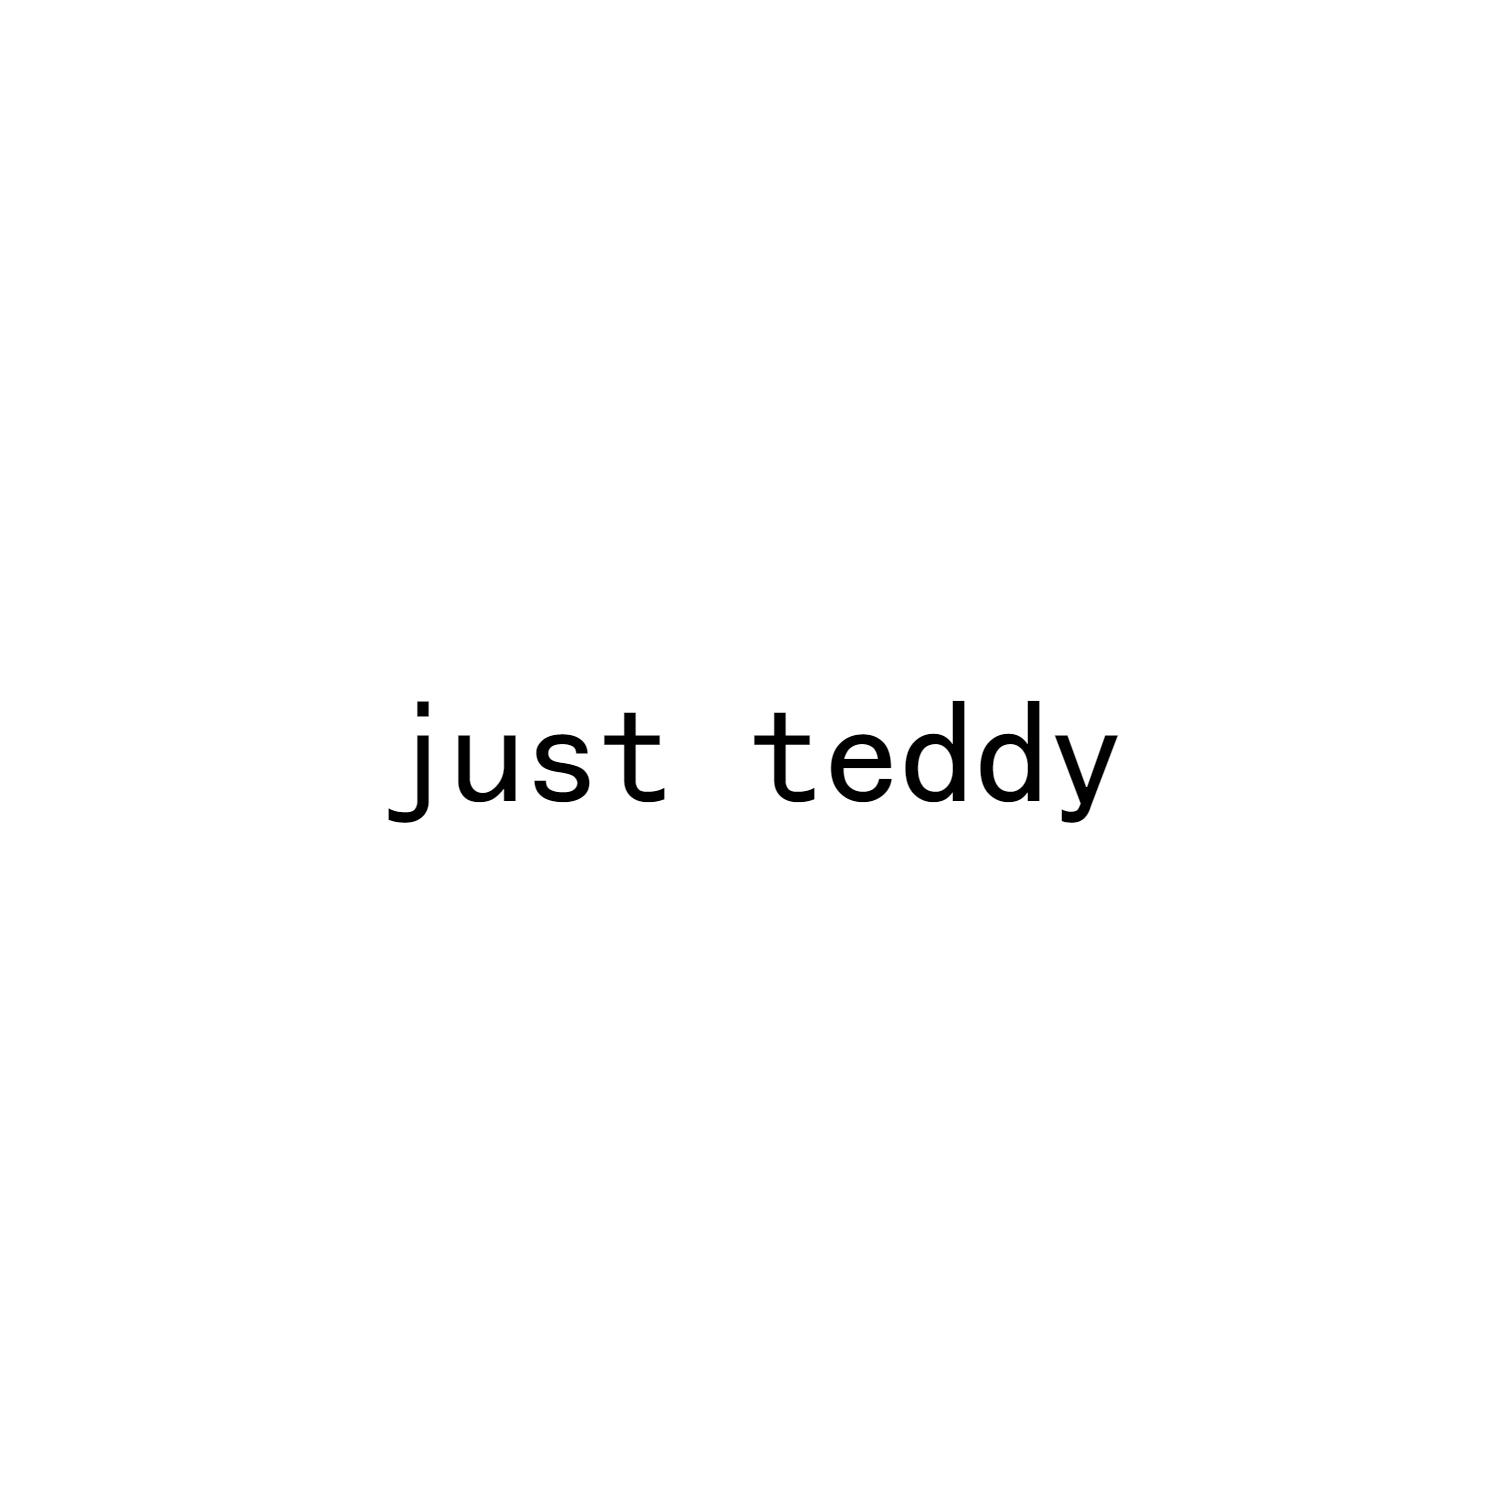 JUST TEDDY缝合针商标转让费用买卖交易流程